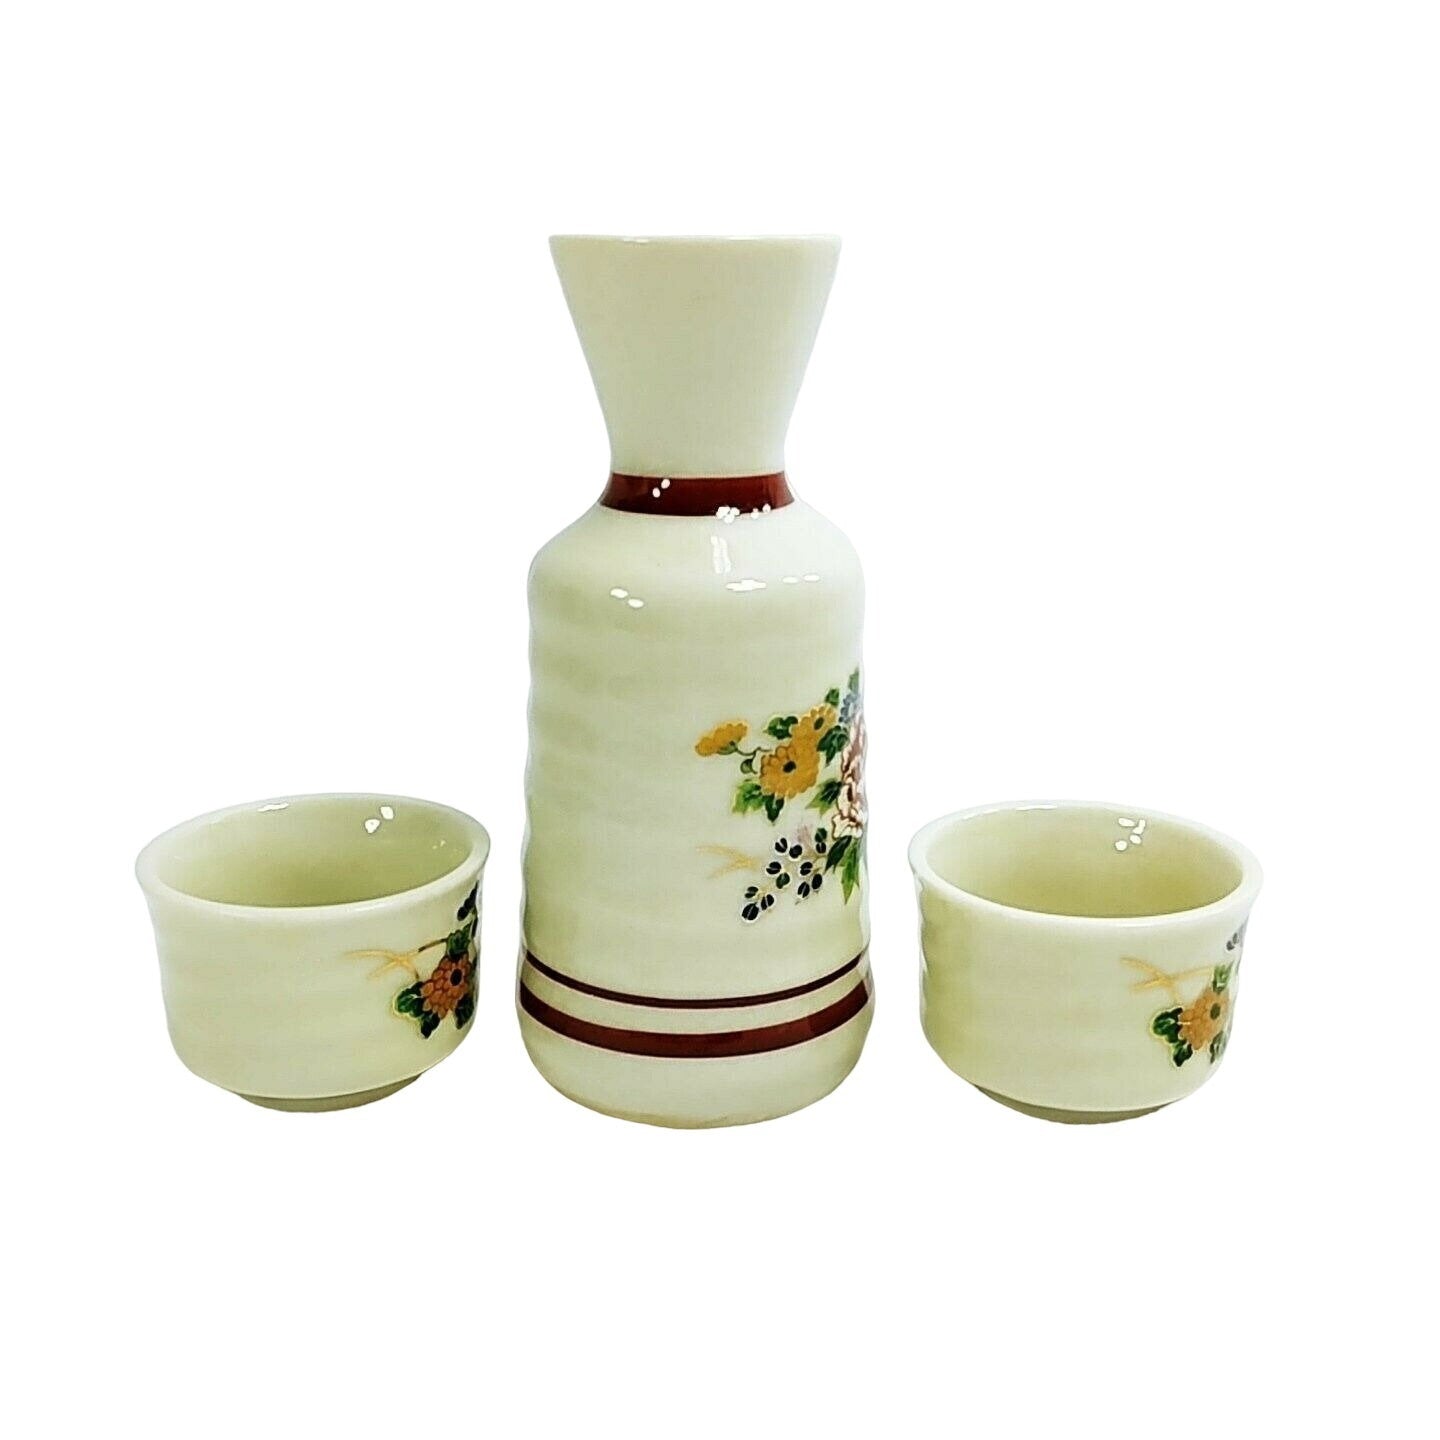 Sake Japanese 3-pc Set Asian Floral Design with Gold Outline Chop marked